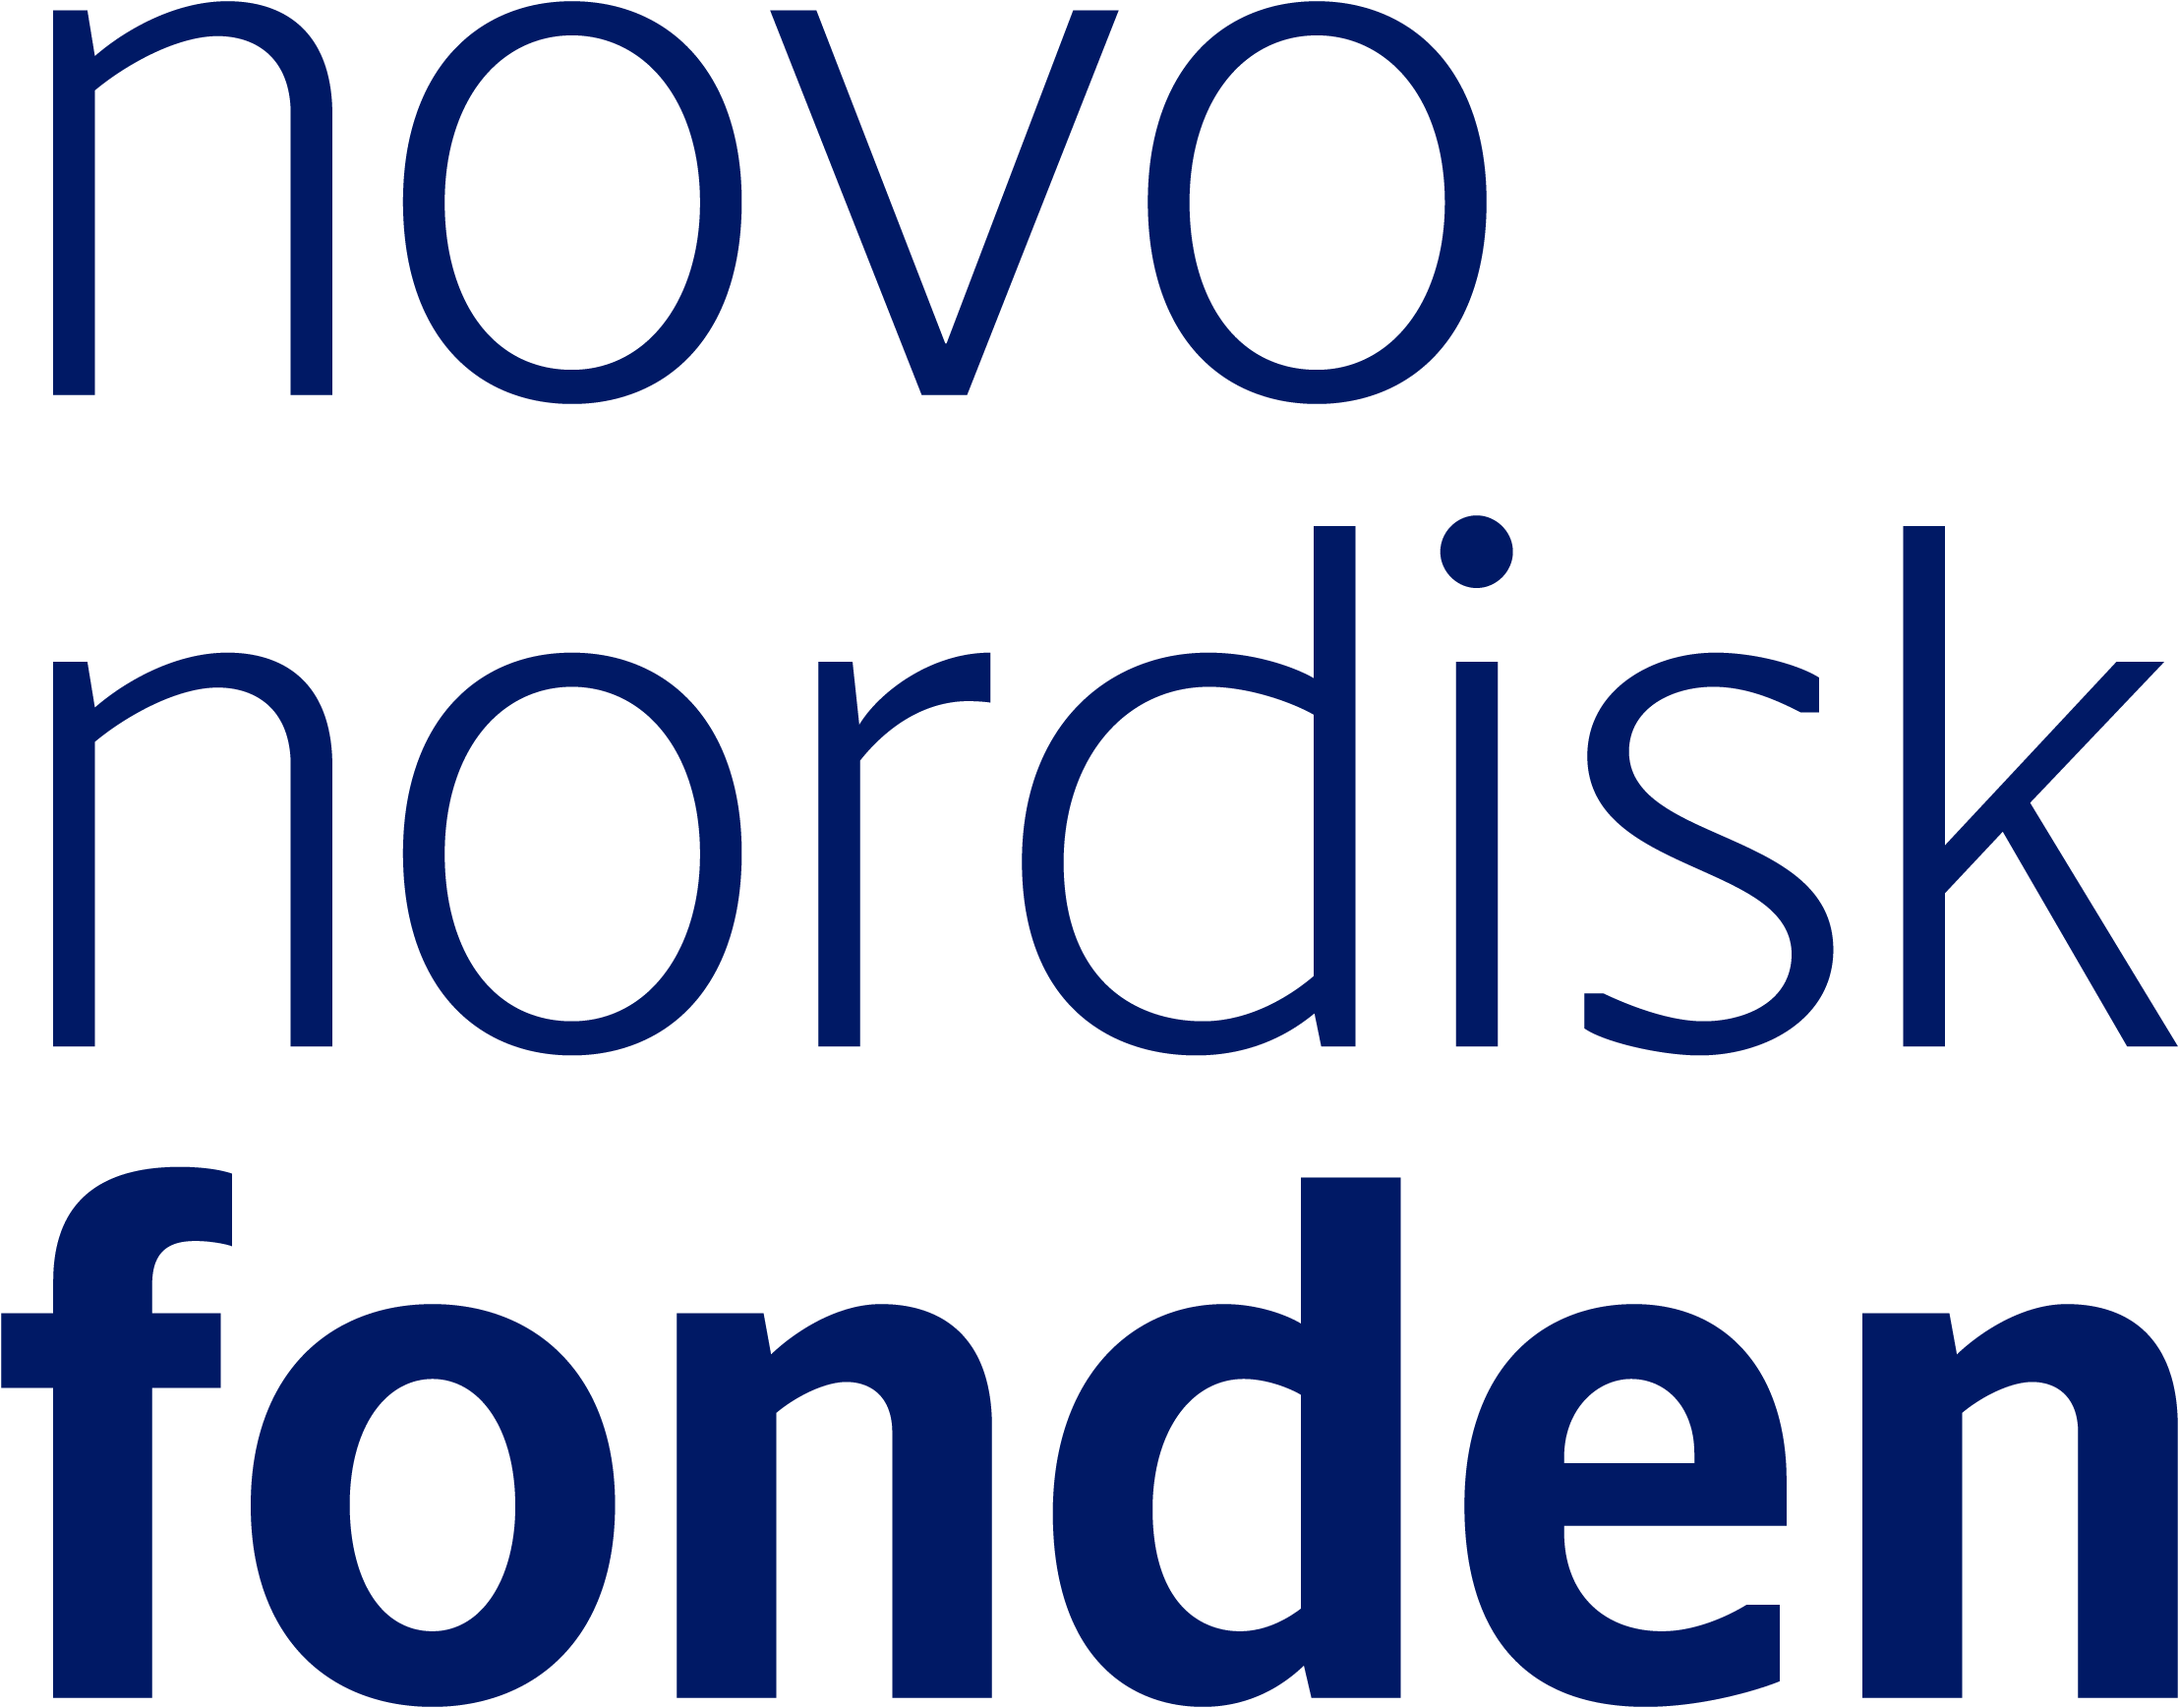 Novo Nordisk fondens logo